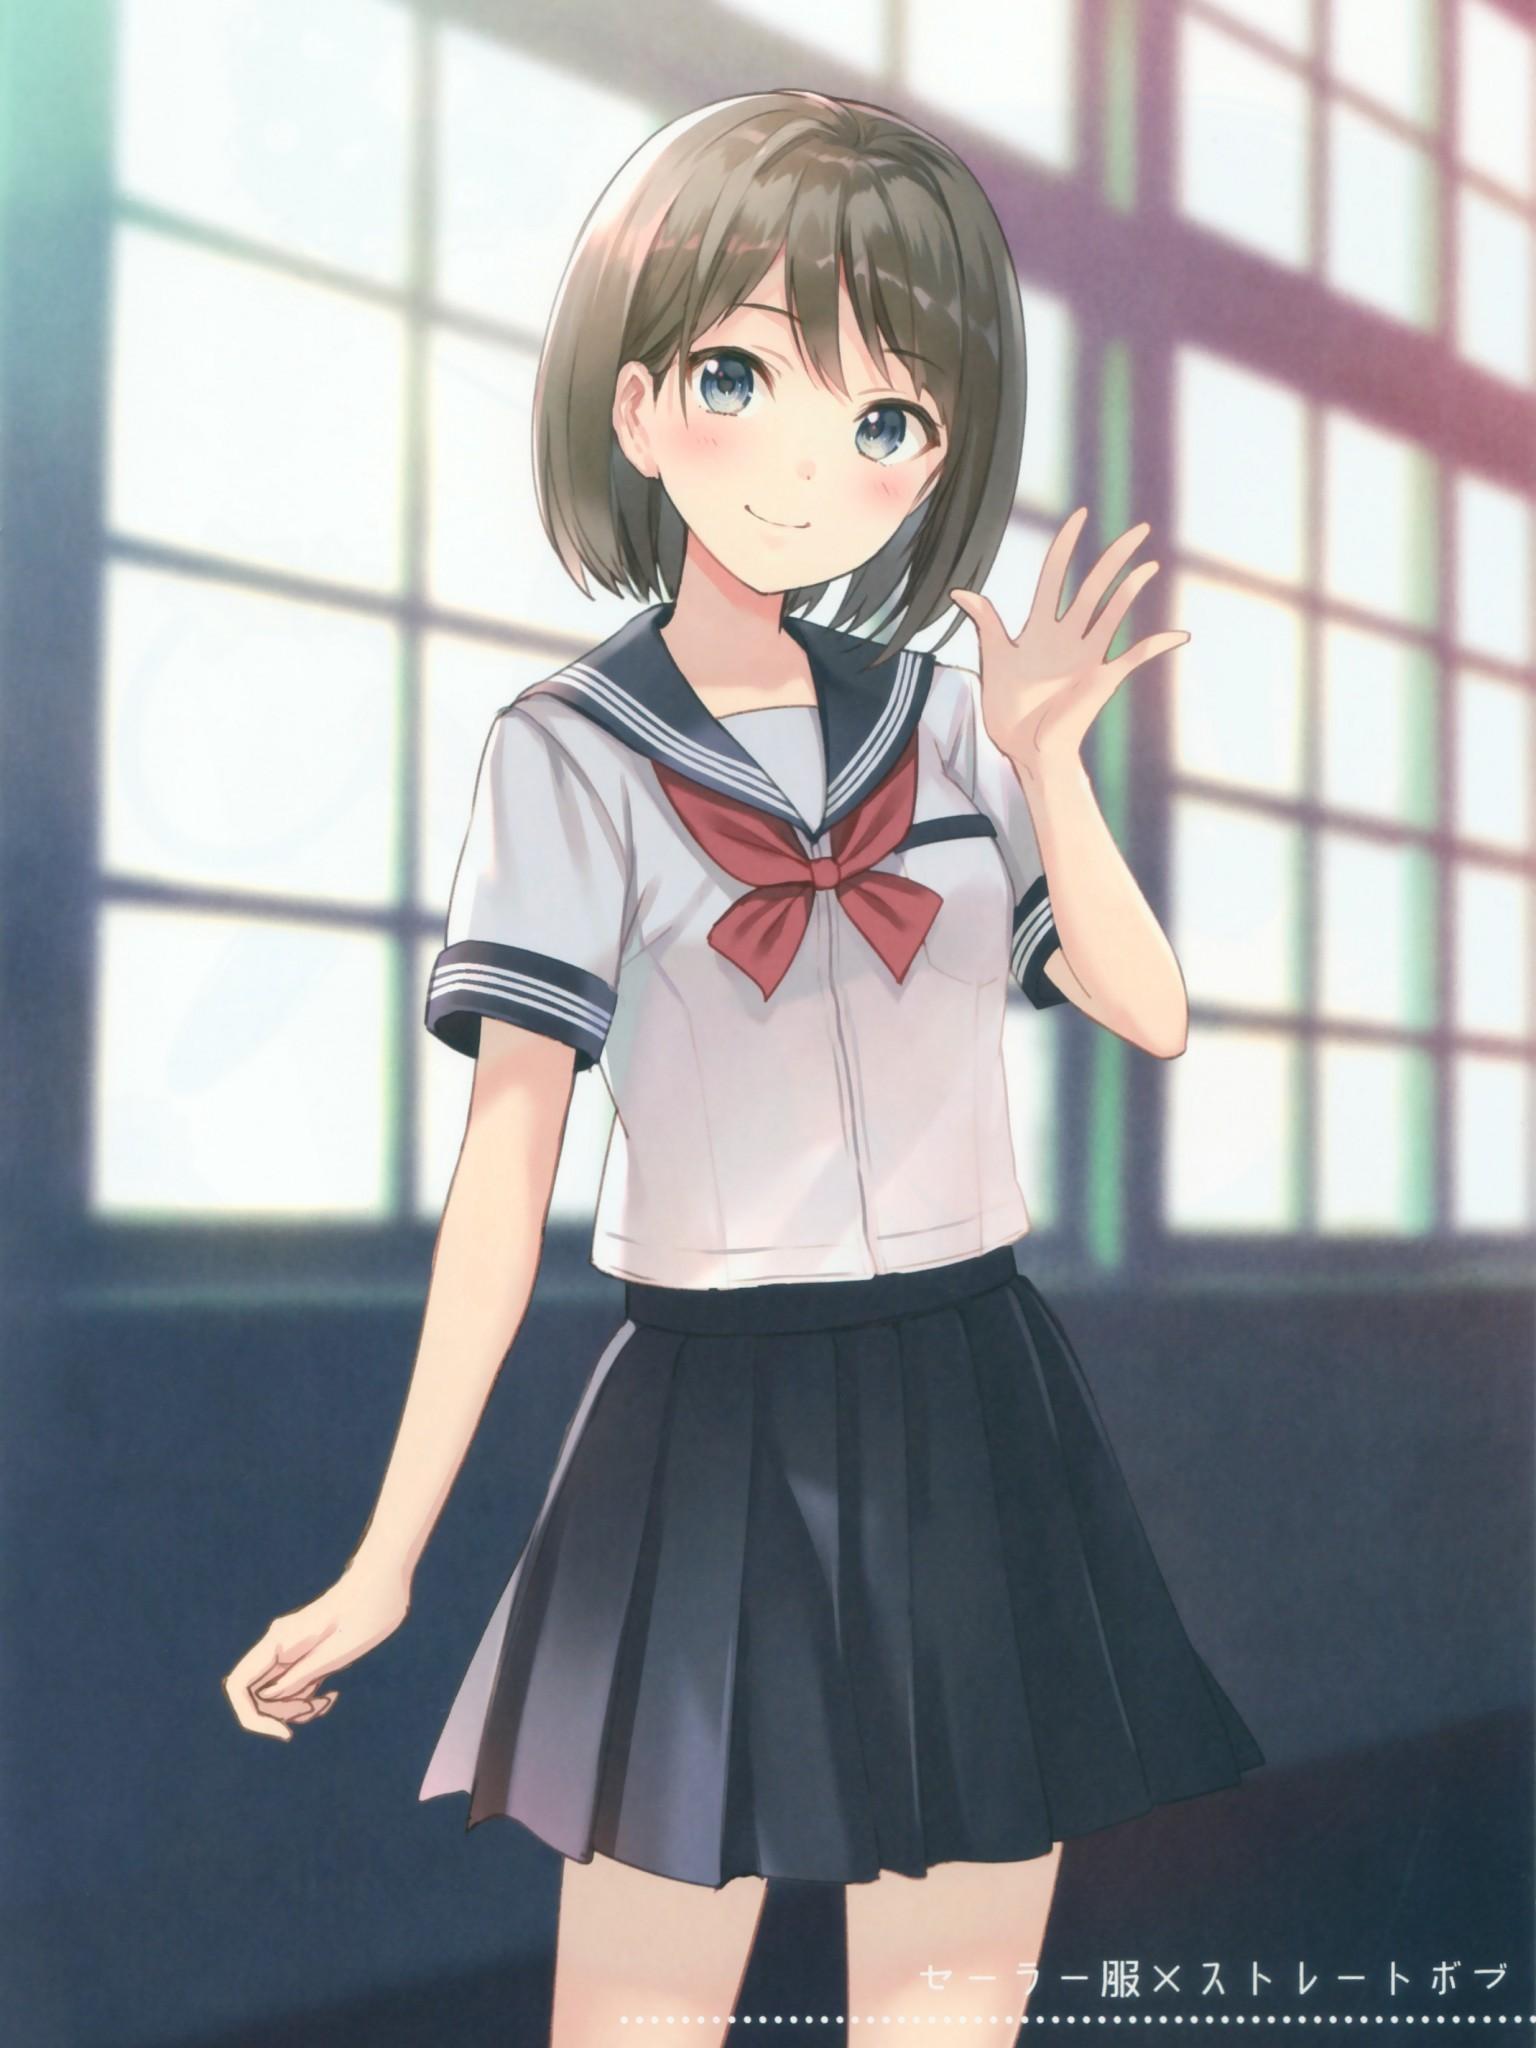 Download 1536x2048 Anime Girl, School Uniform, Smiling